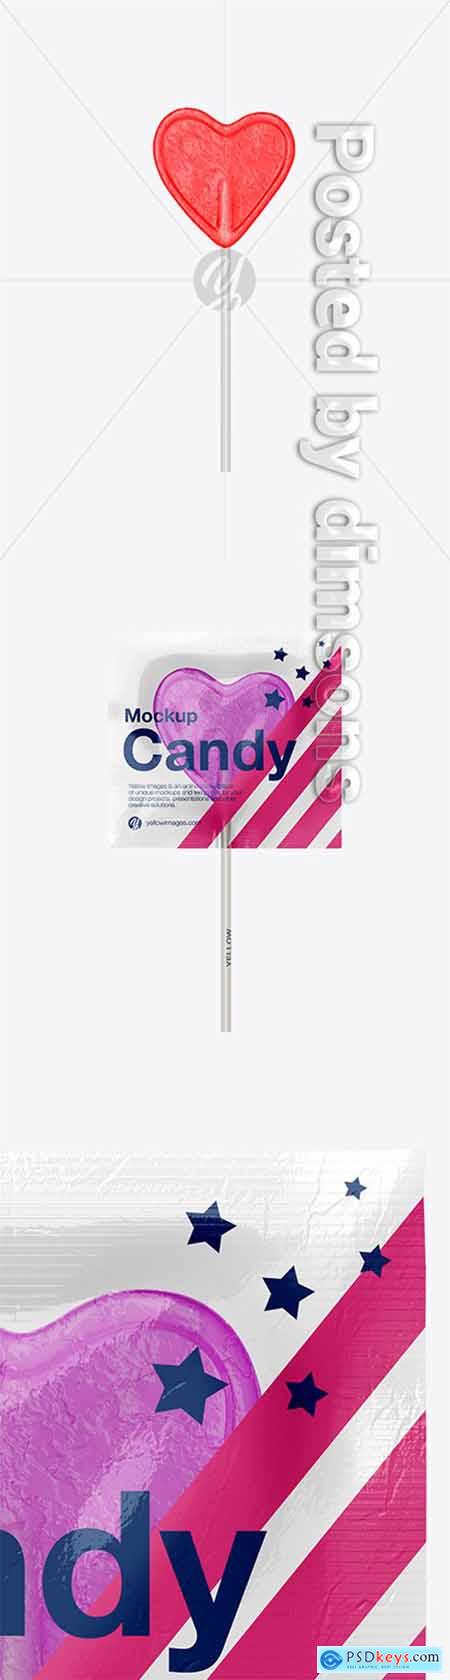 Candy Mockup 23627